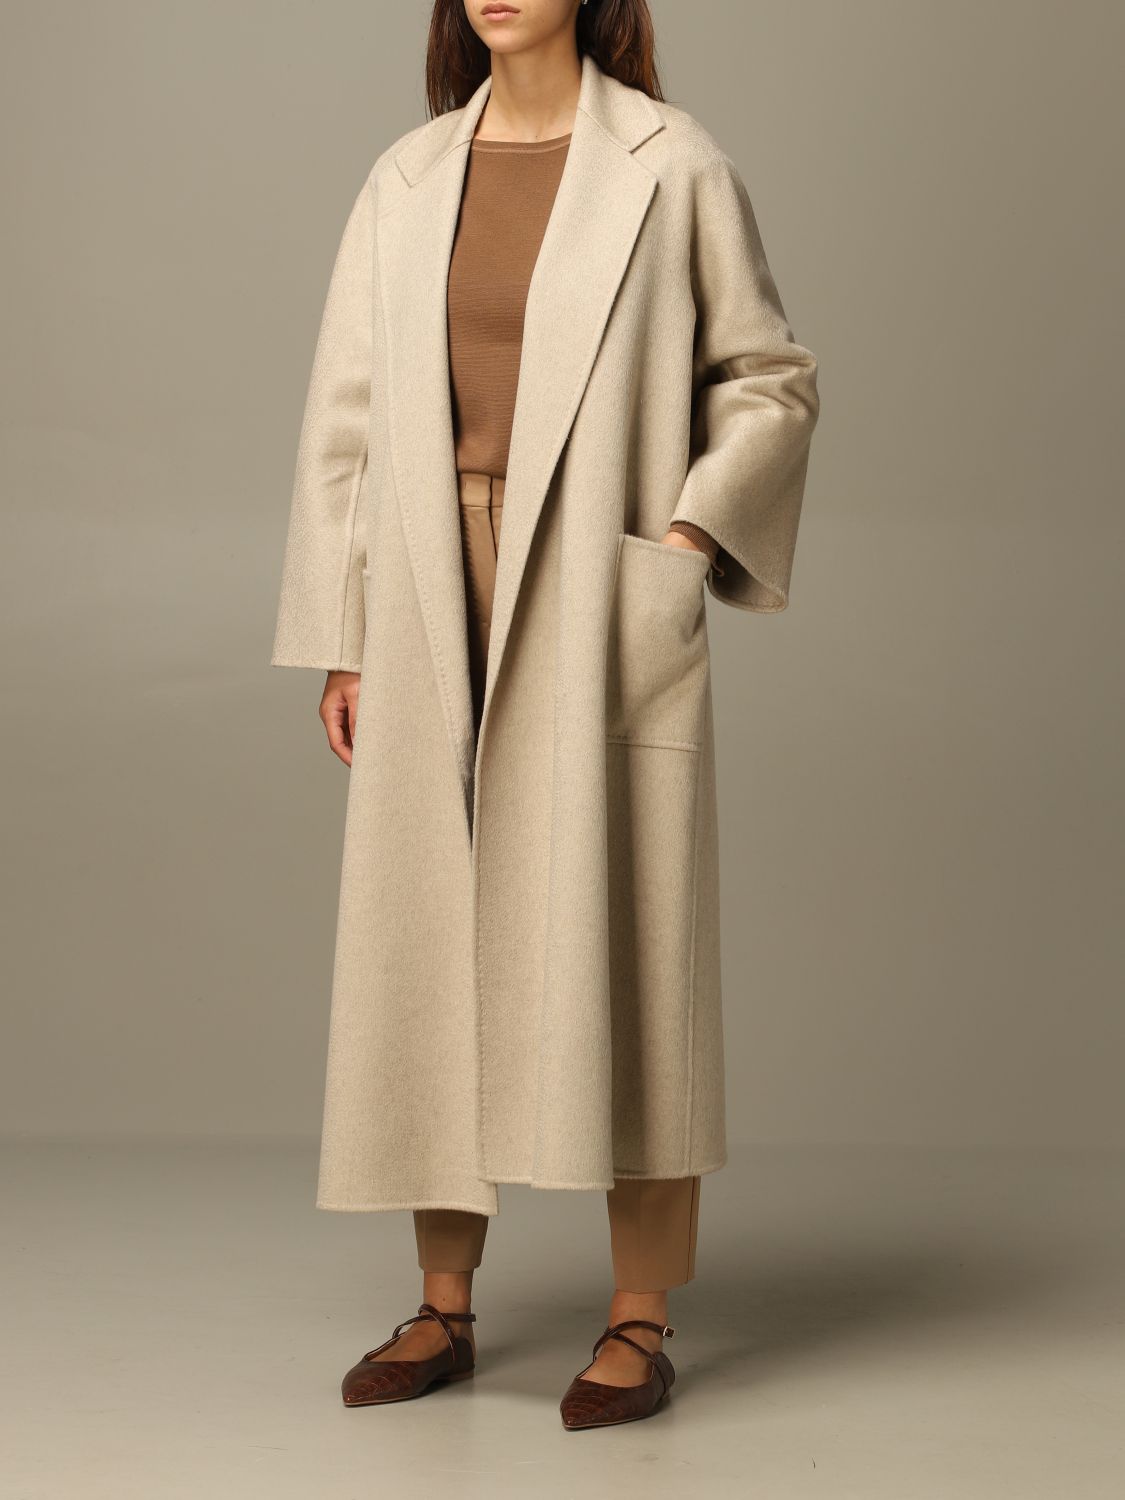 MAX MARA: Labbro coat in zibellined cashmere - Beige | Coat Max Mara ...